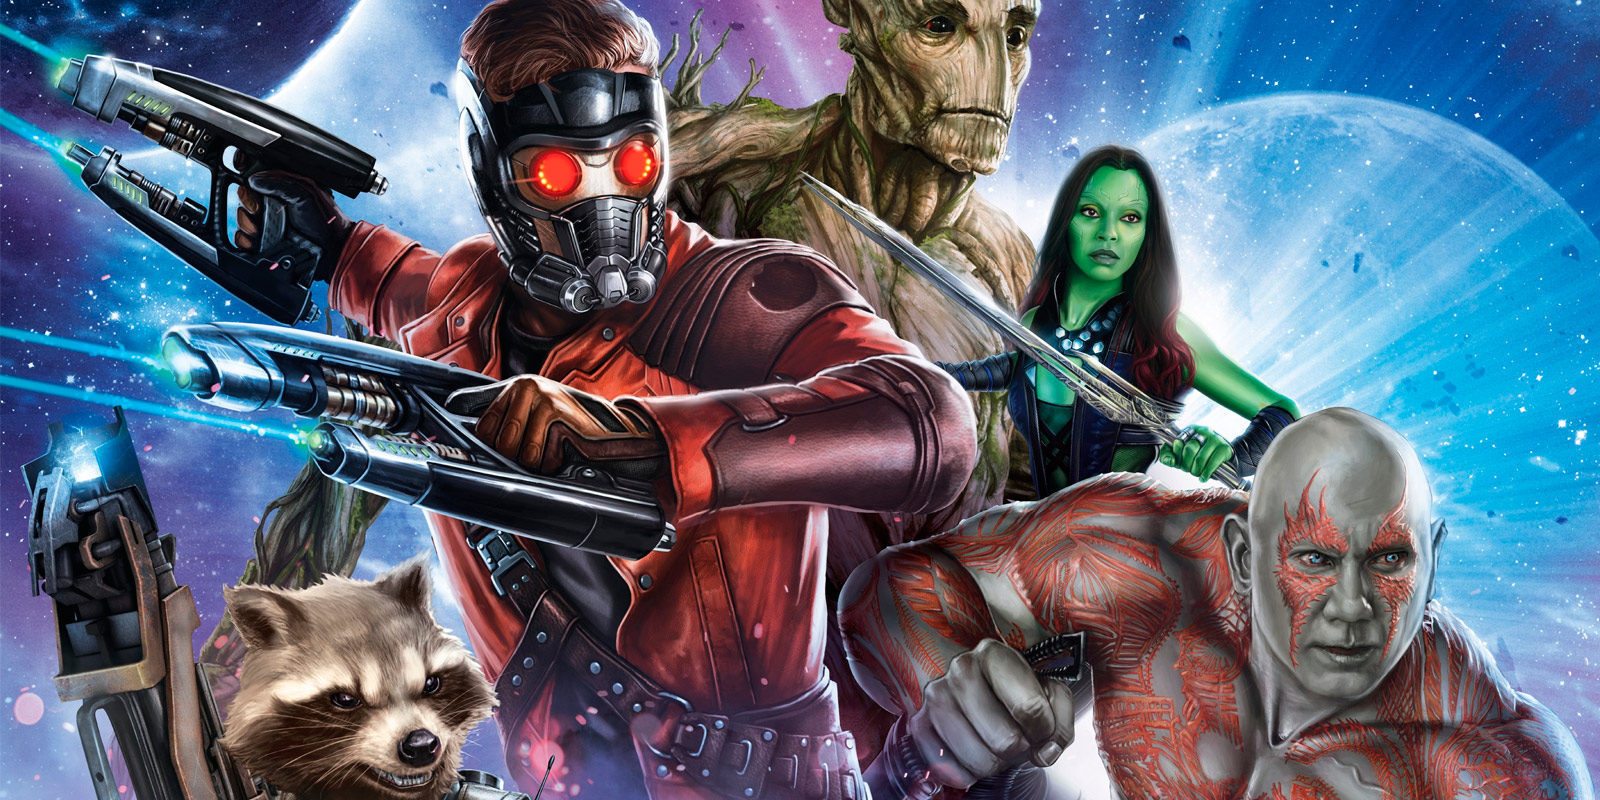 Chris Pratt anuncia el final de rodaje de 'Guardianes de la Galaxia Vol. 2' con una divertida foto